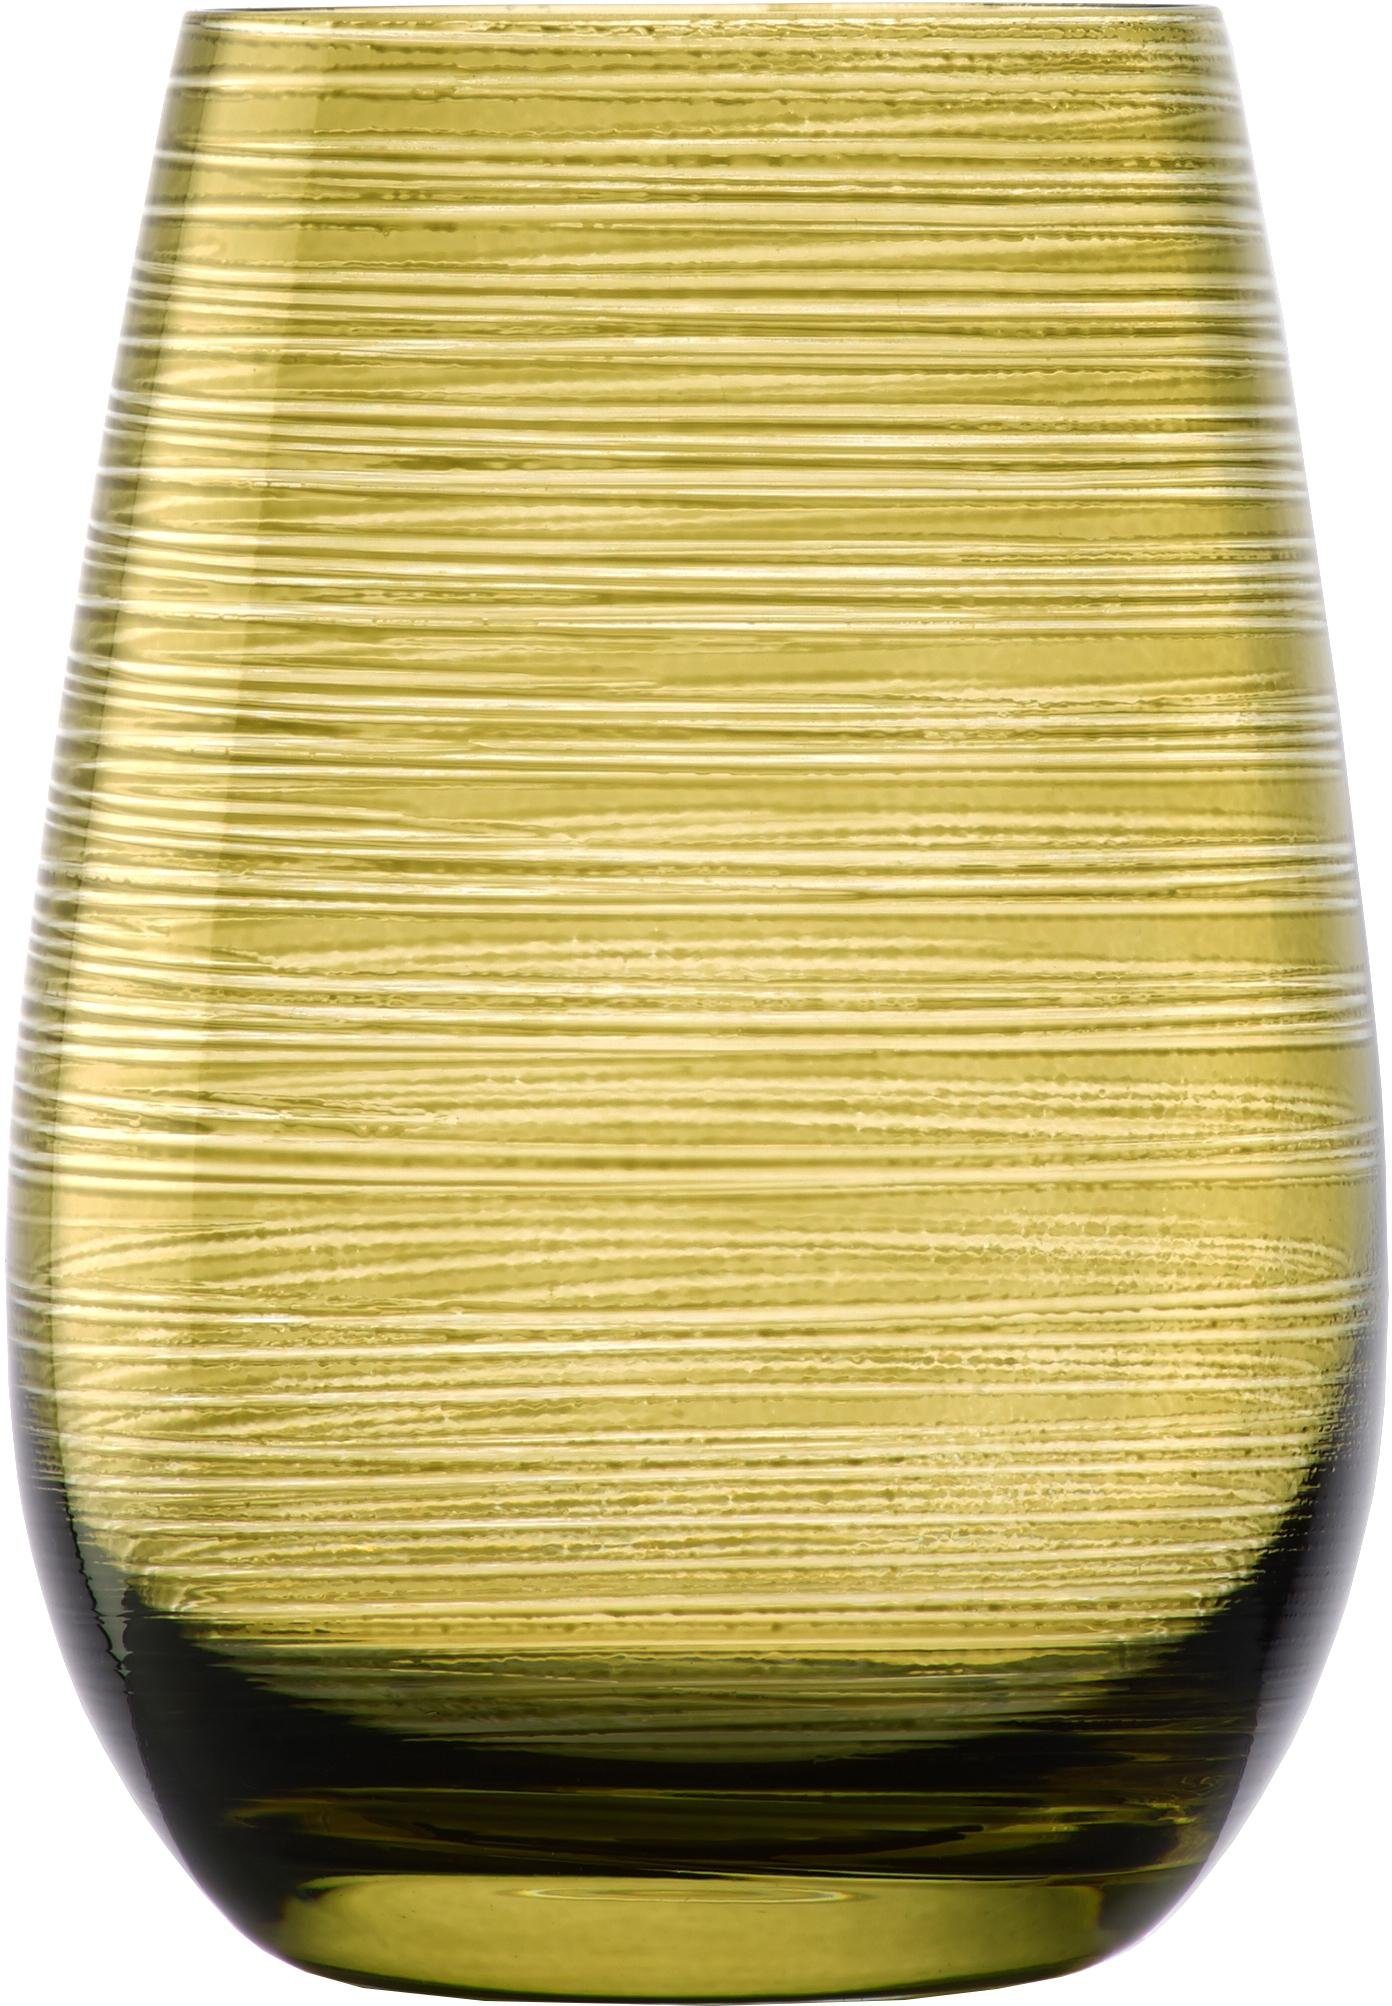 Stölzle Becher TWISTER, Glas, 6-teilig olivgrün